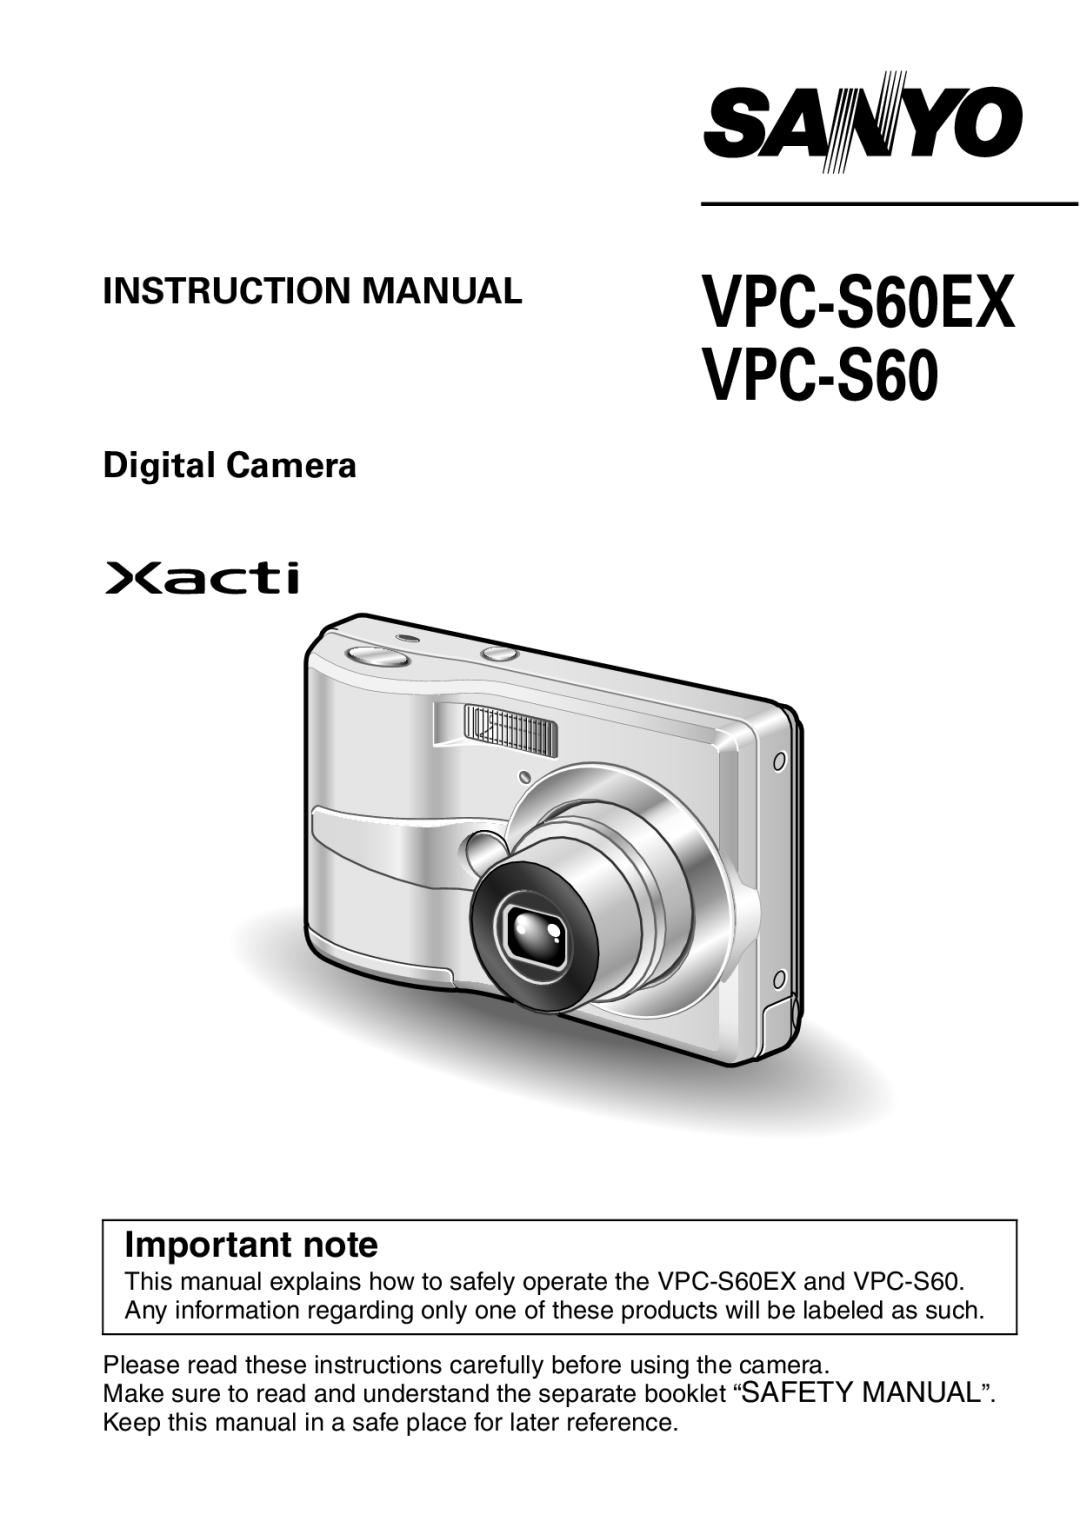 Sanyo instruction manual INSTRUCTION MANUAL Digital Camera, Important note, VPC-S60EX VPC-S60 